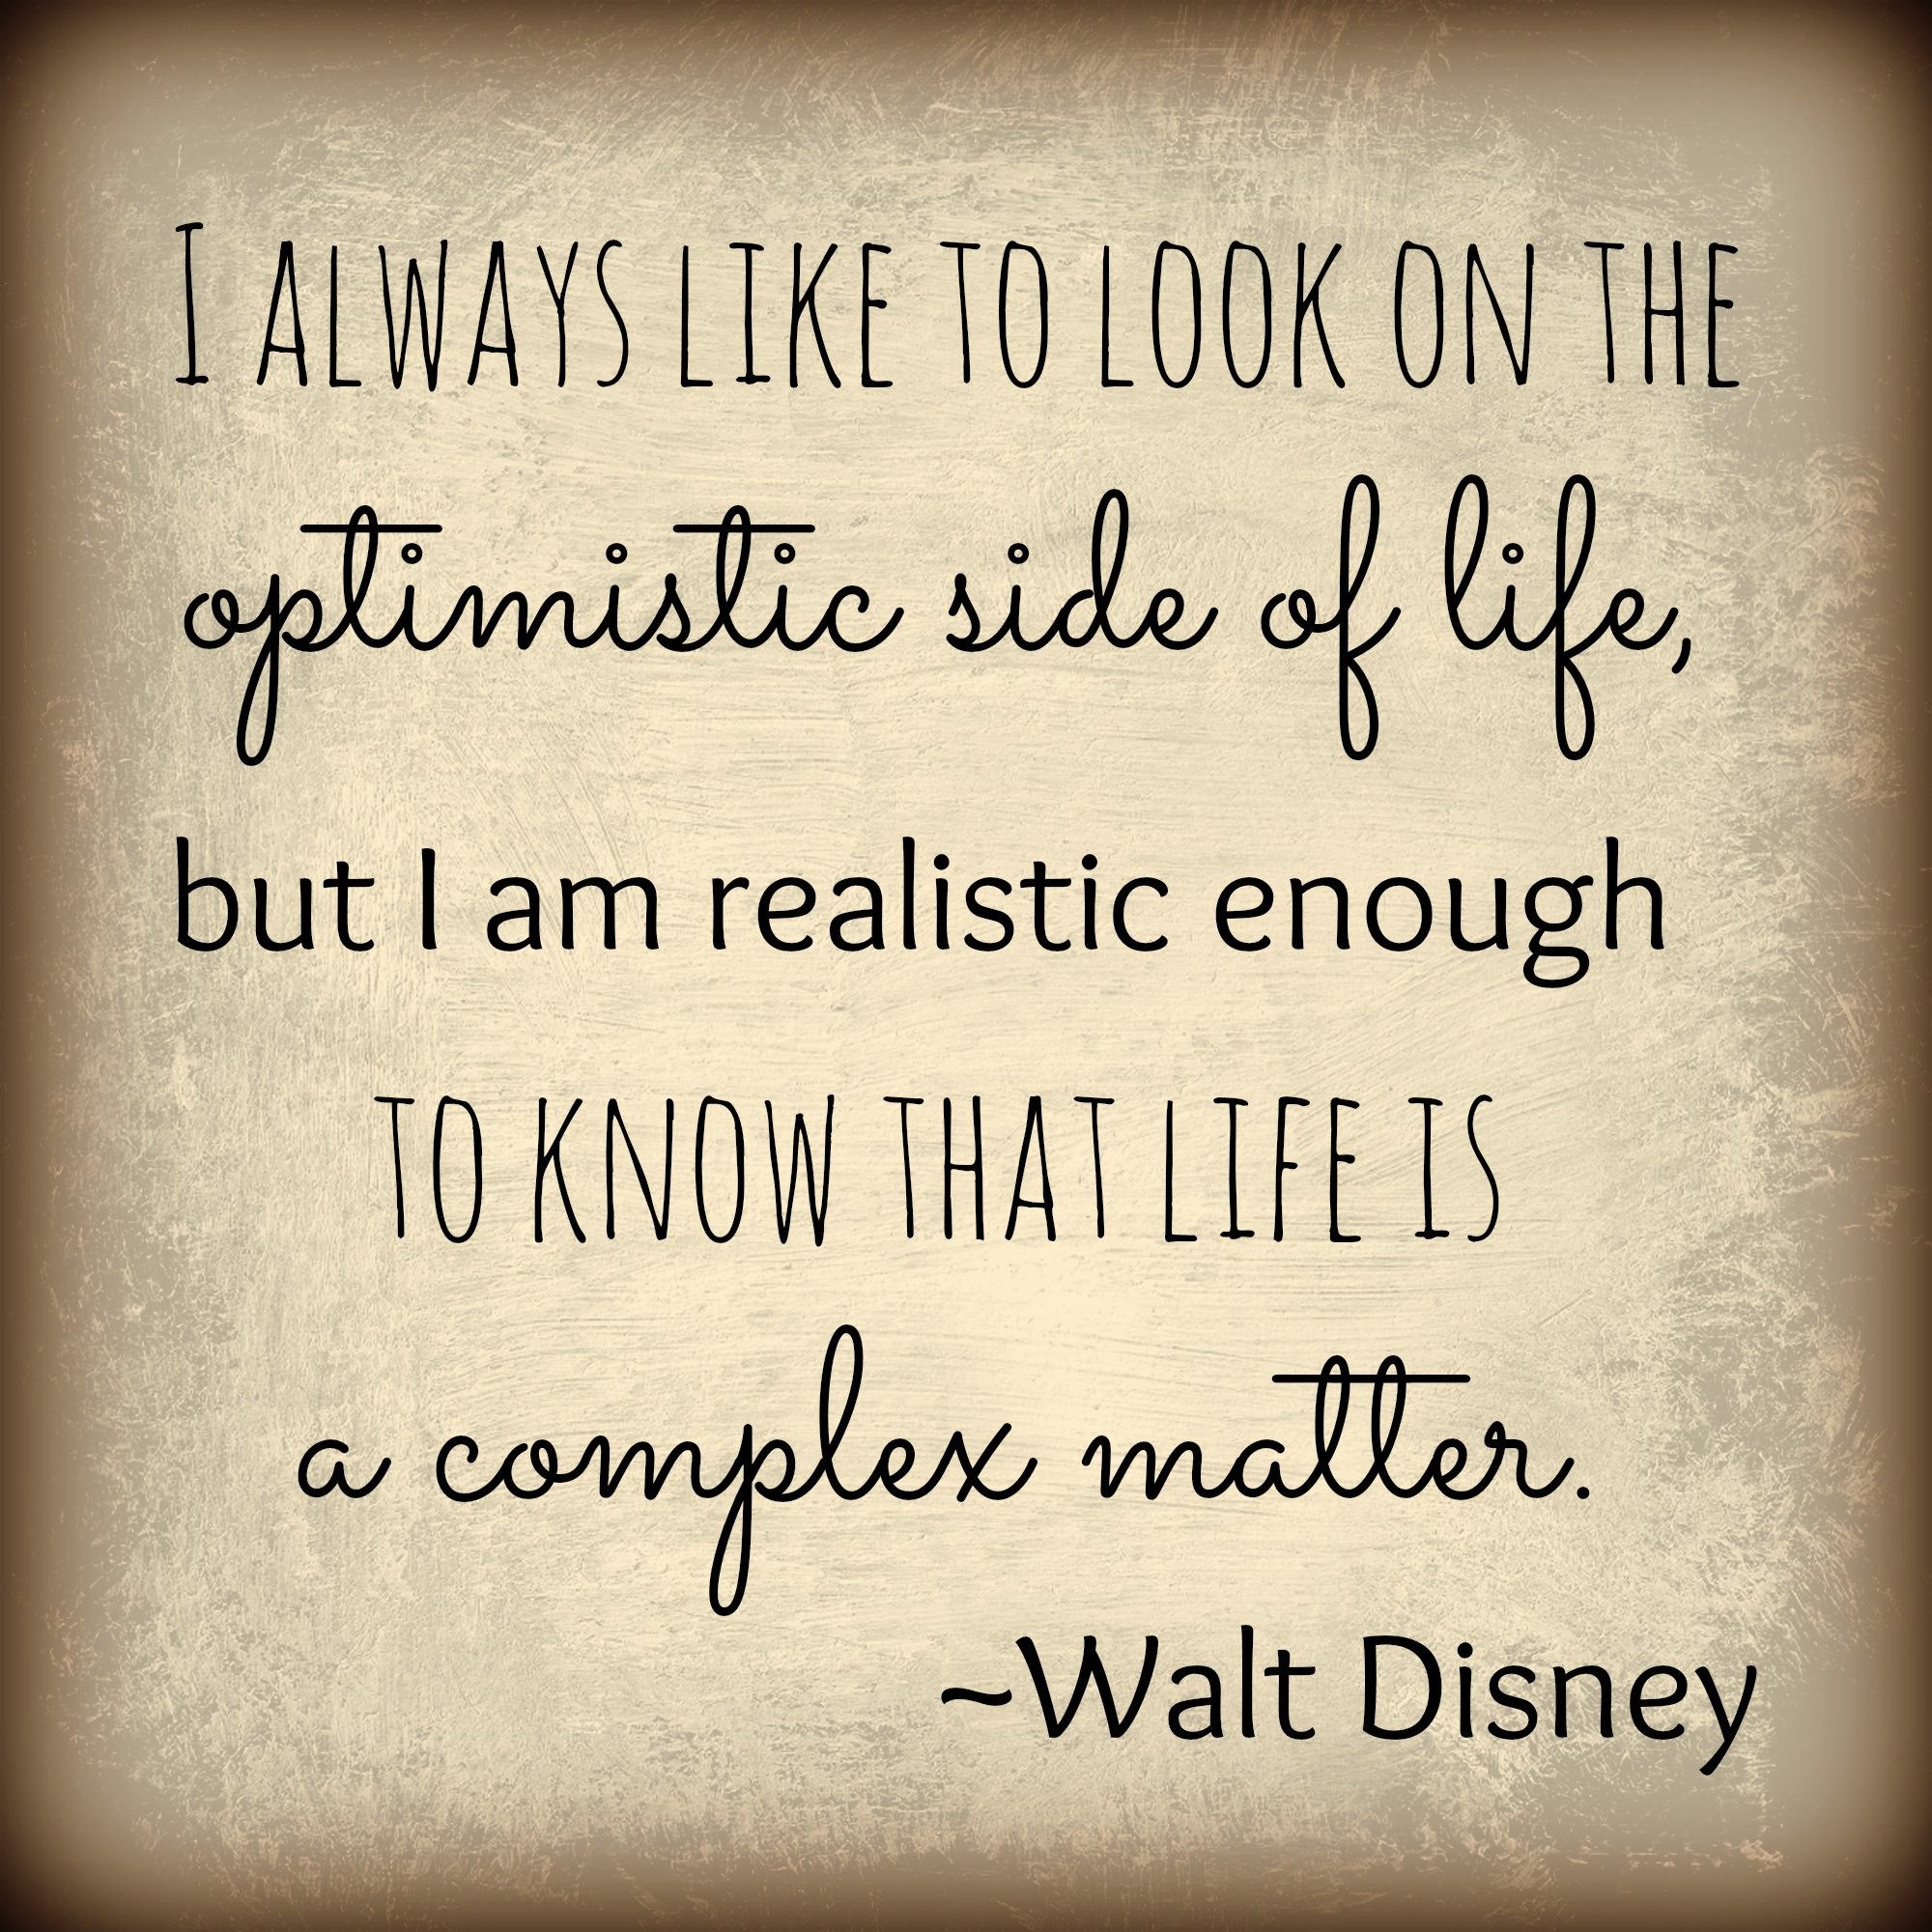 Disney Motivational Quotes
 Inspirational Walt Disney Quotes QuotesGram